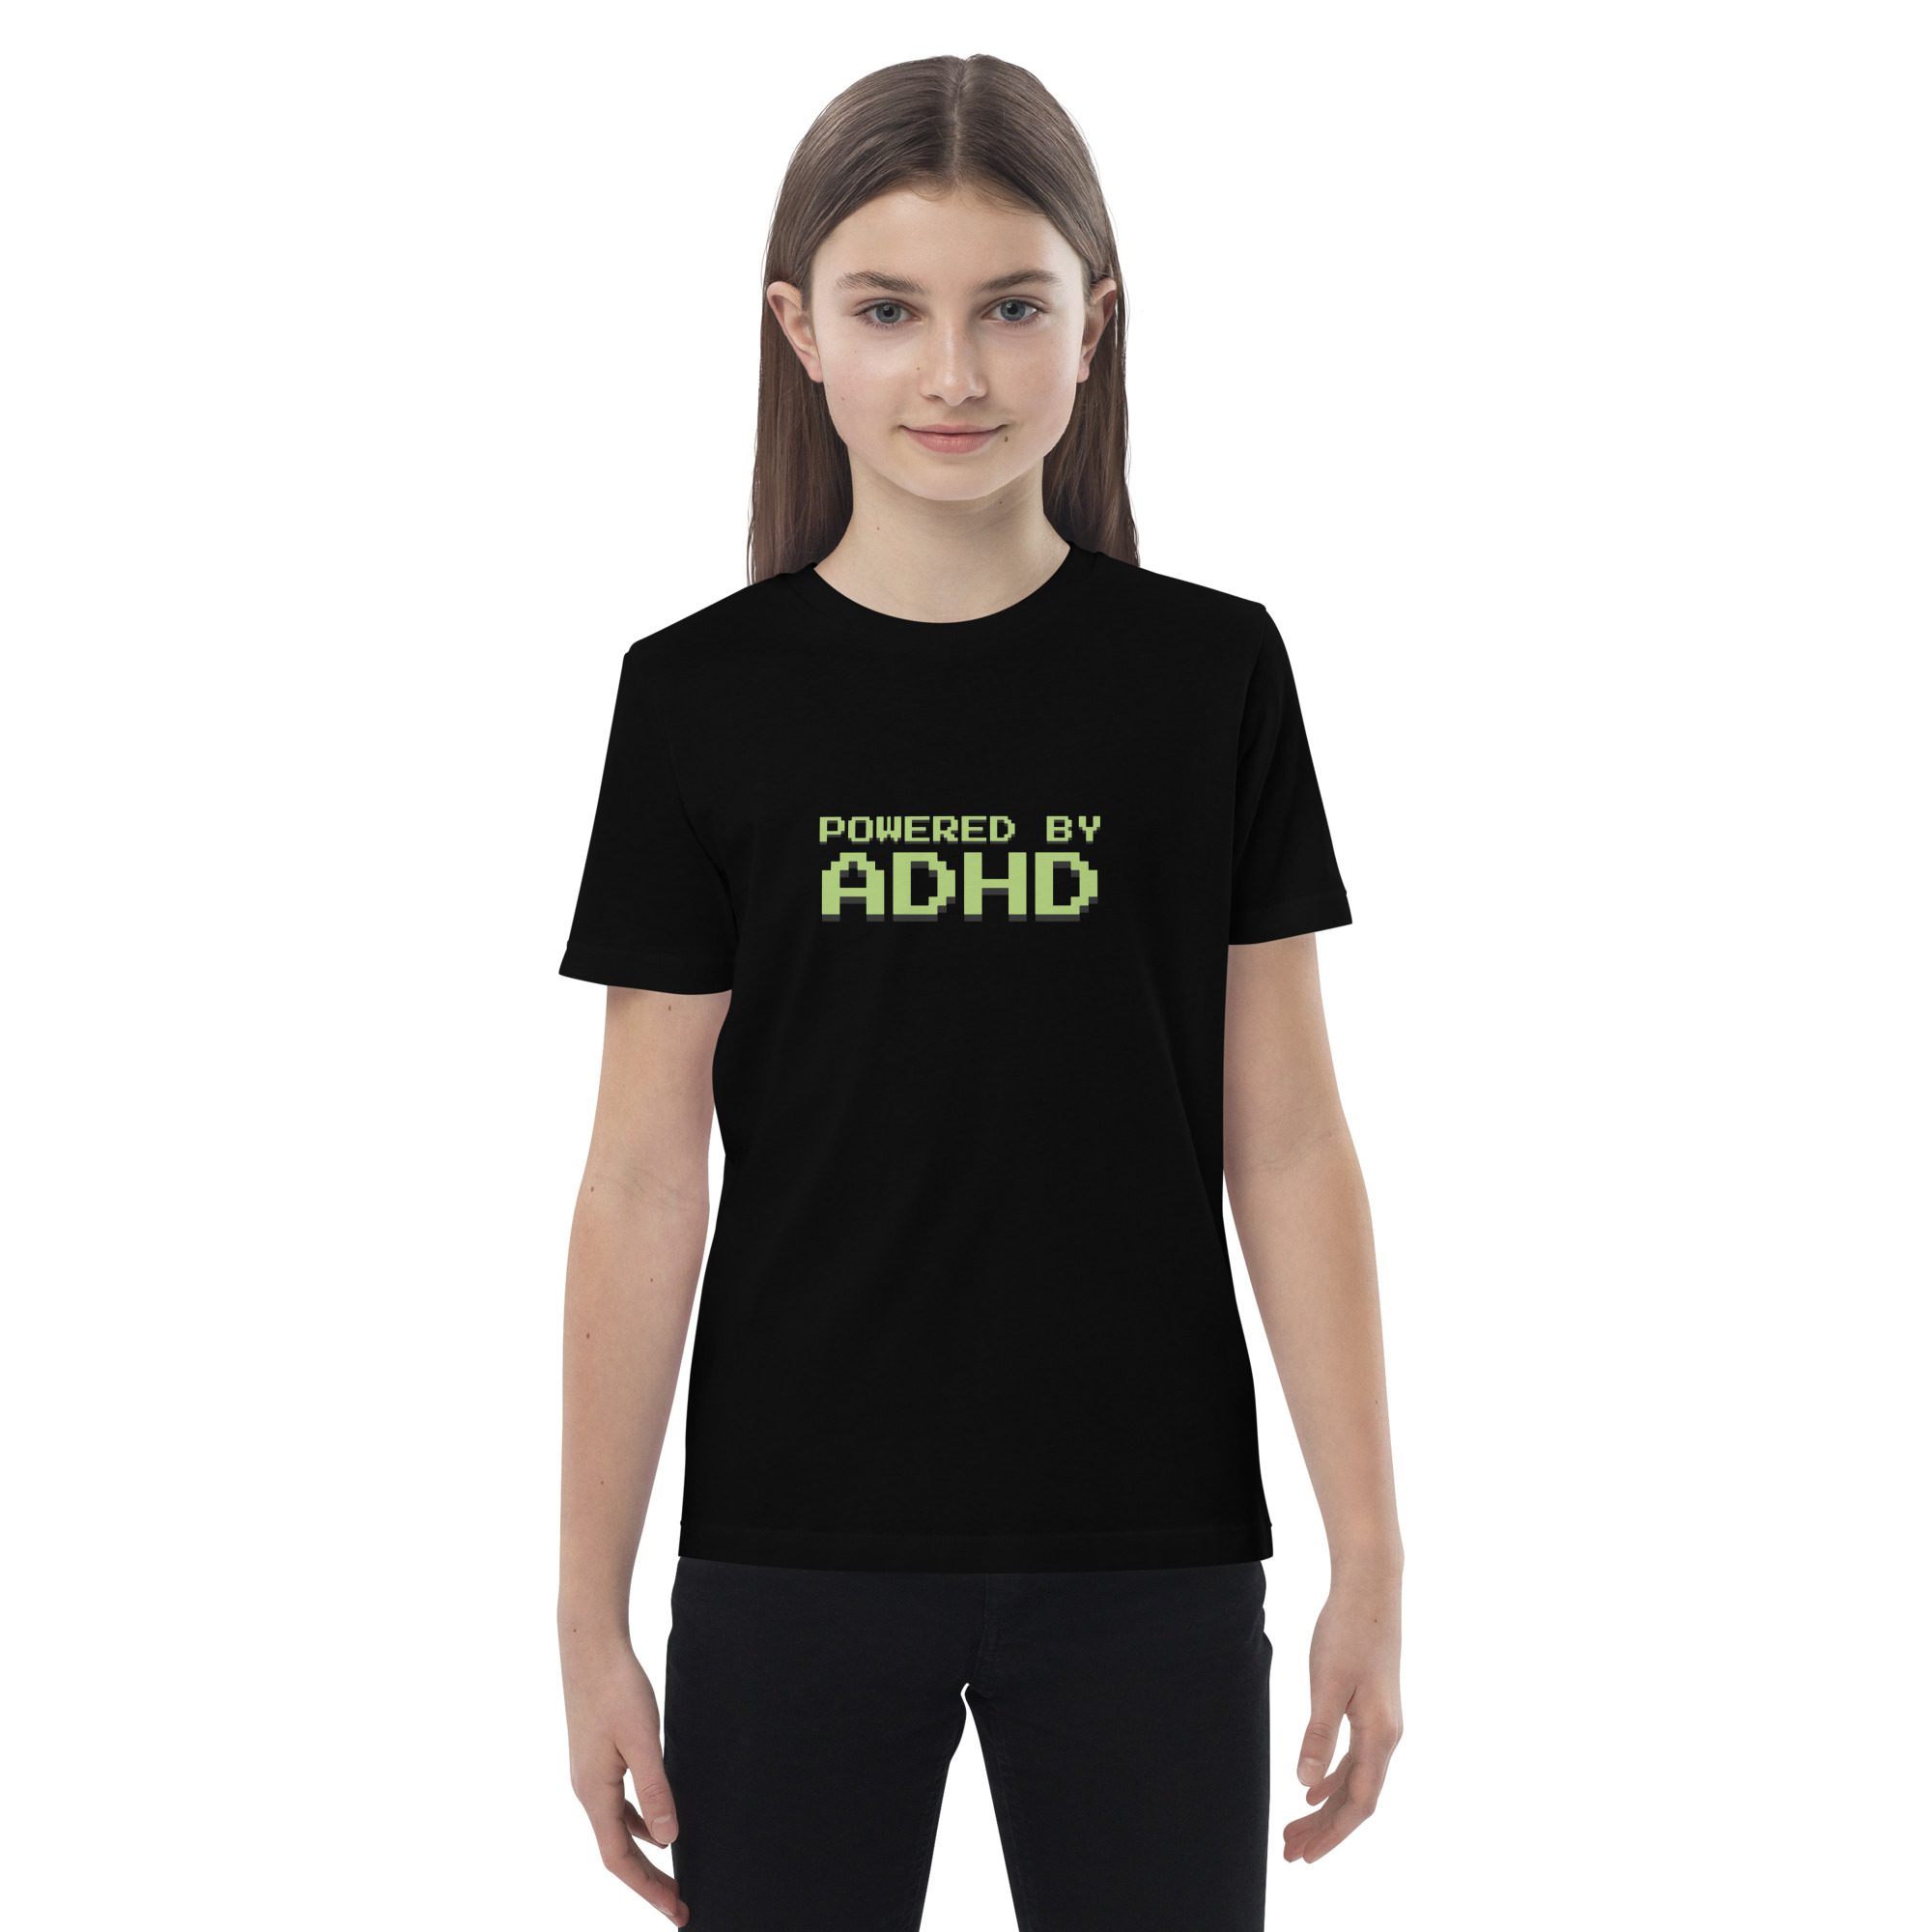 Powered By ADHD Organic Cotton Kids T-shirt